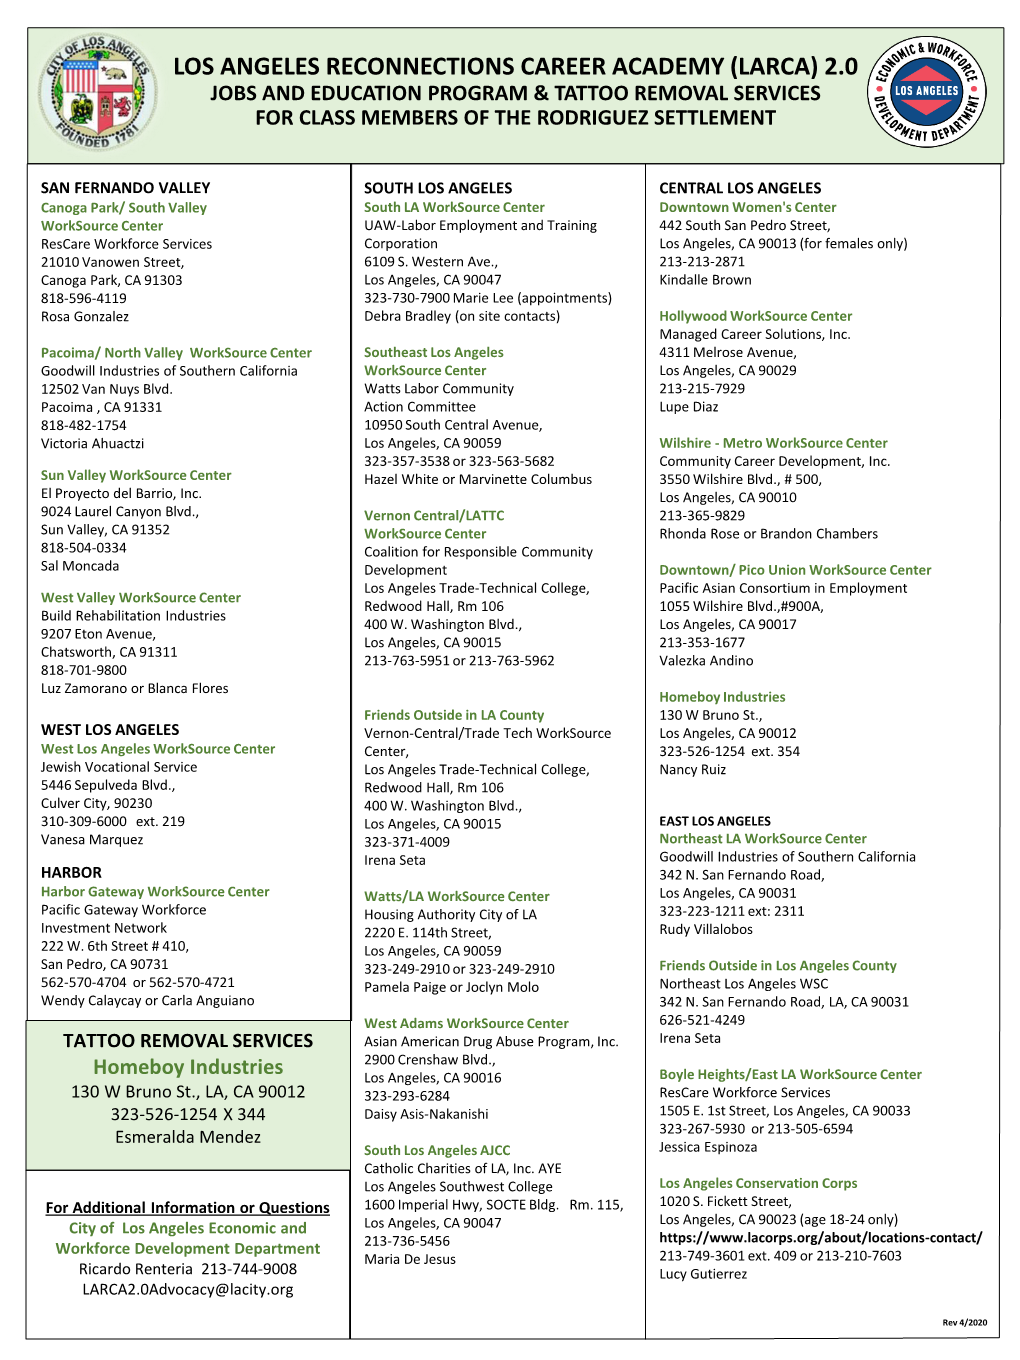 LARCA List of Service Providers